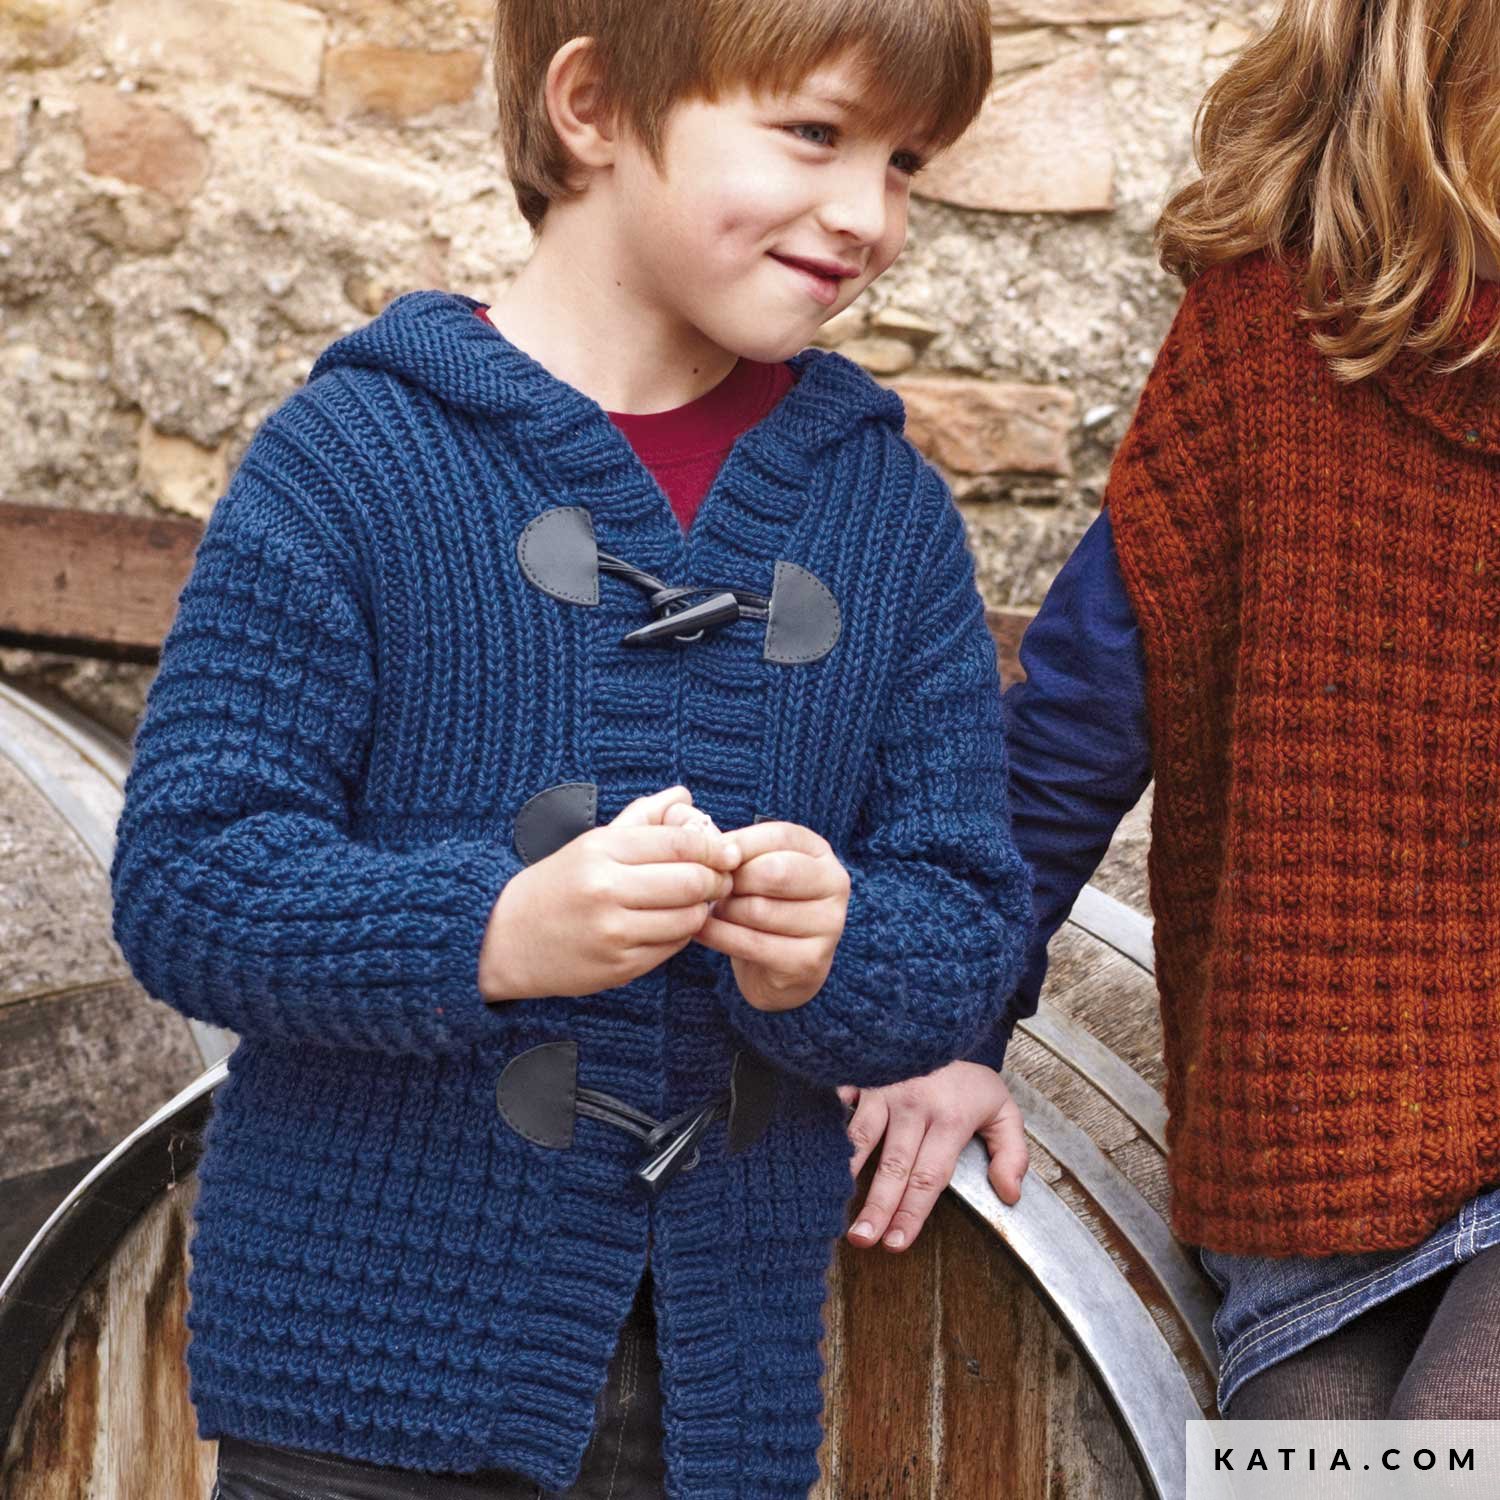 Fall to Spring Gift Idea Cardigan for Infant Boy Handknit Age 9 to 12 mo. Kleding Jongenskleding Babykleding voor jongens Truien Acrylic yarn in "Soft Blue" long sleeve Children's Jacket 